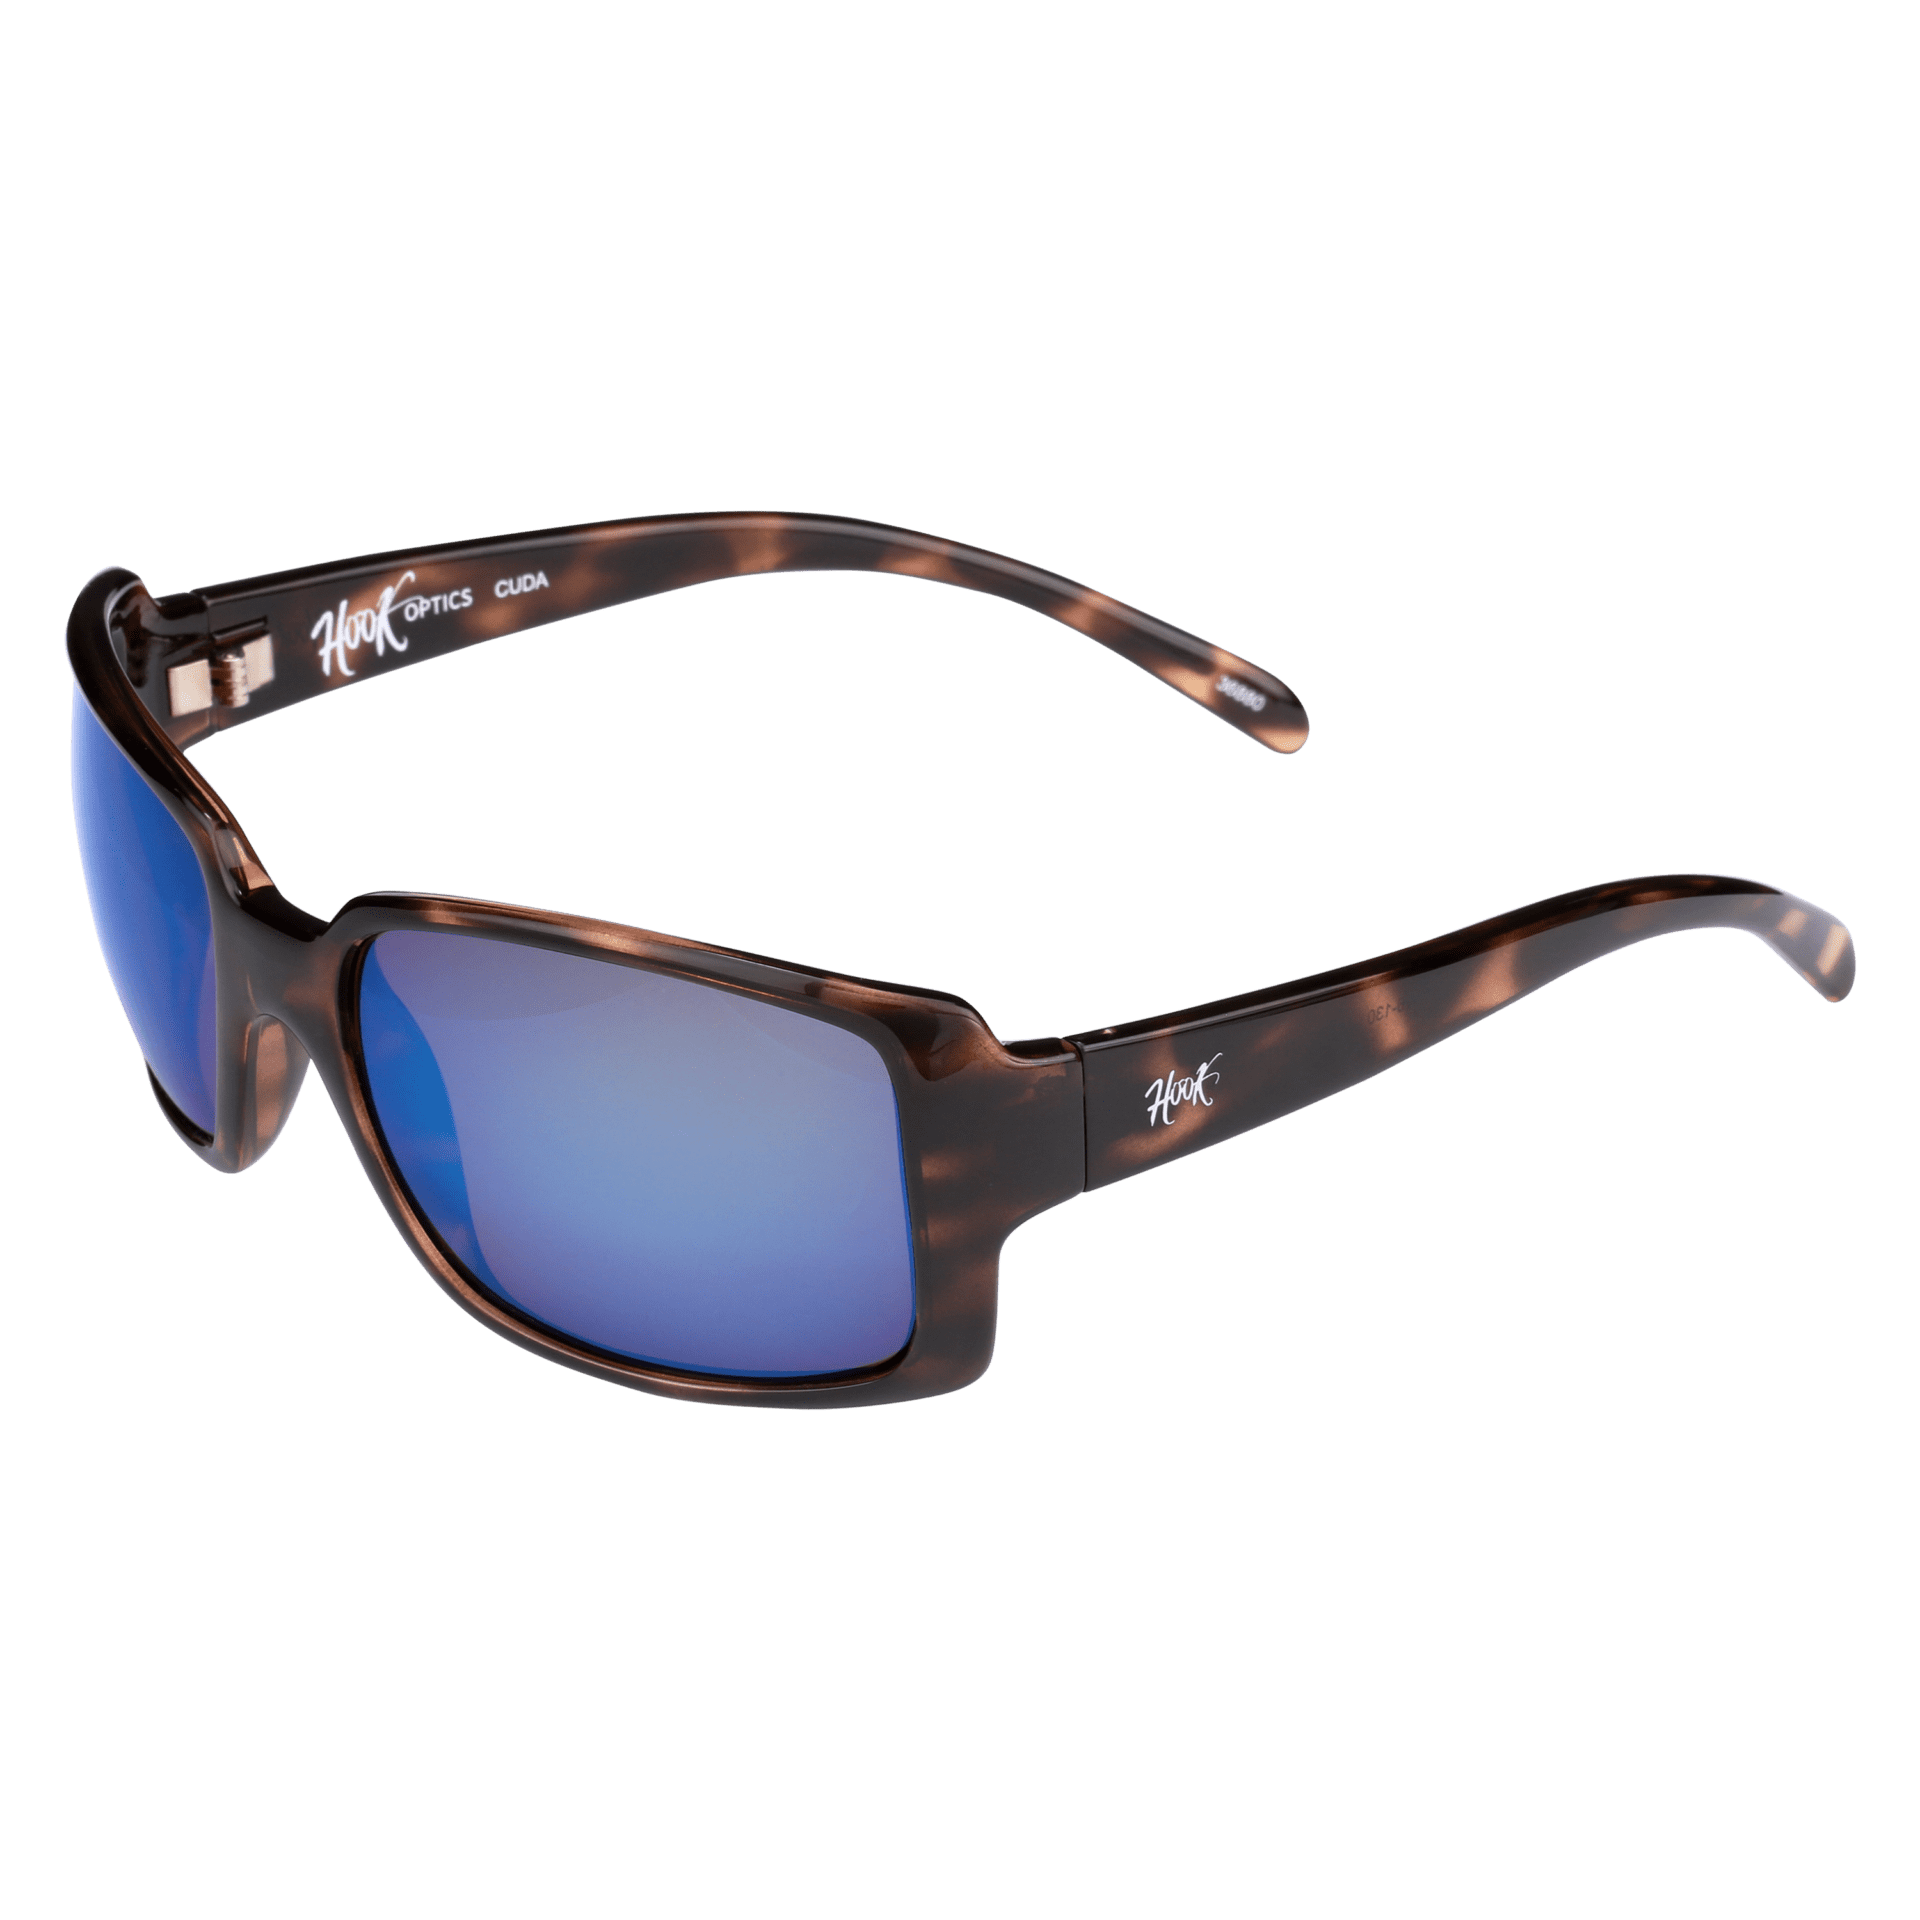 Cuda Tortoise Blue mirror Polarized Sunglasses